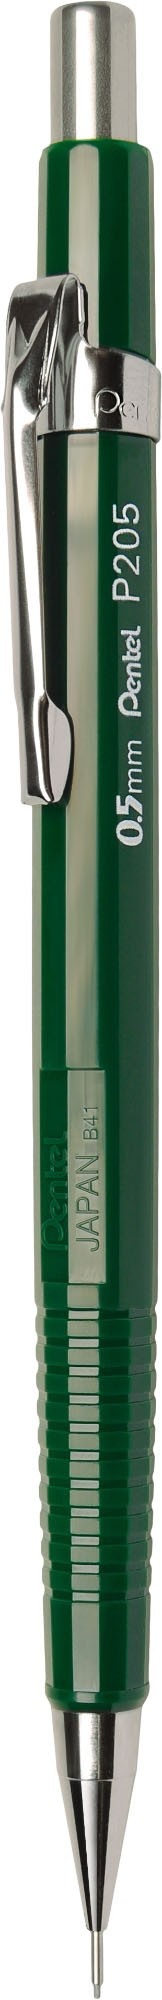 PENTEL Porte-mines Sharp 0,5mm P205-D vert avec gomme